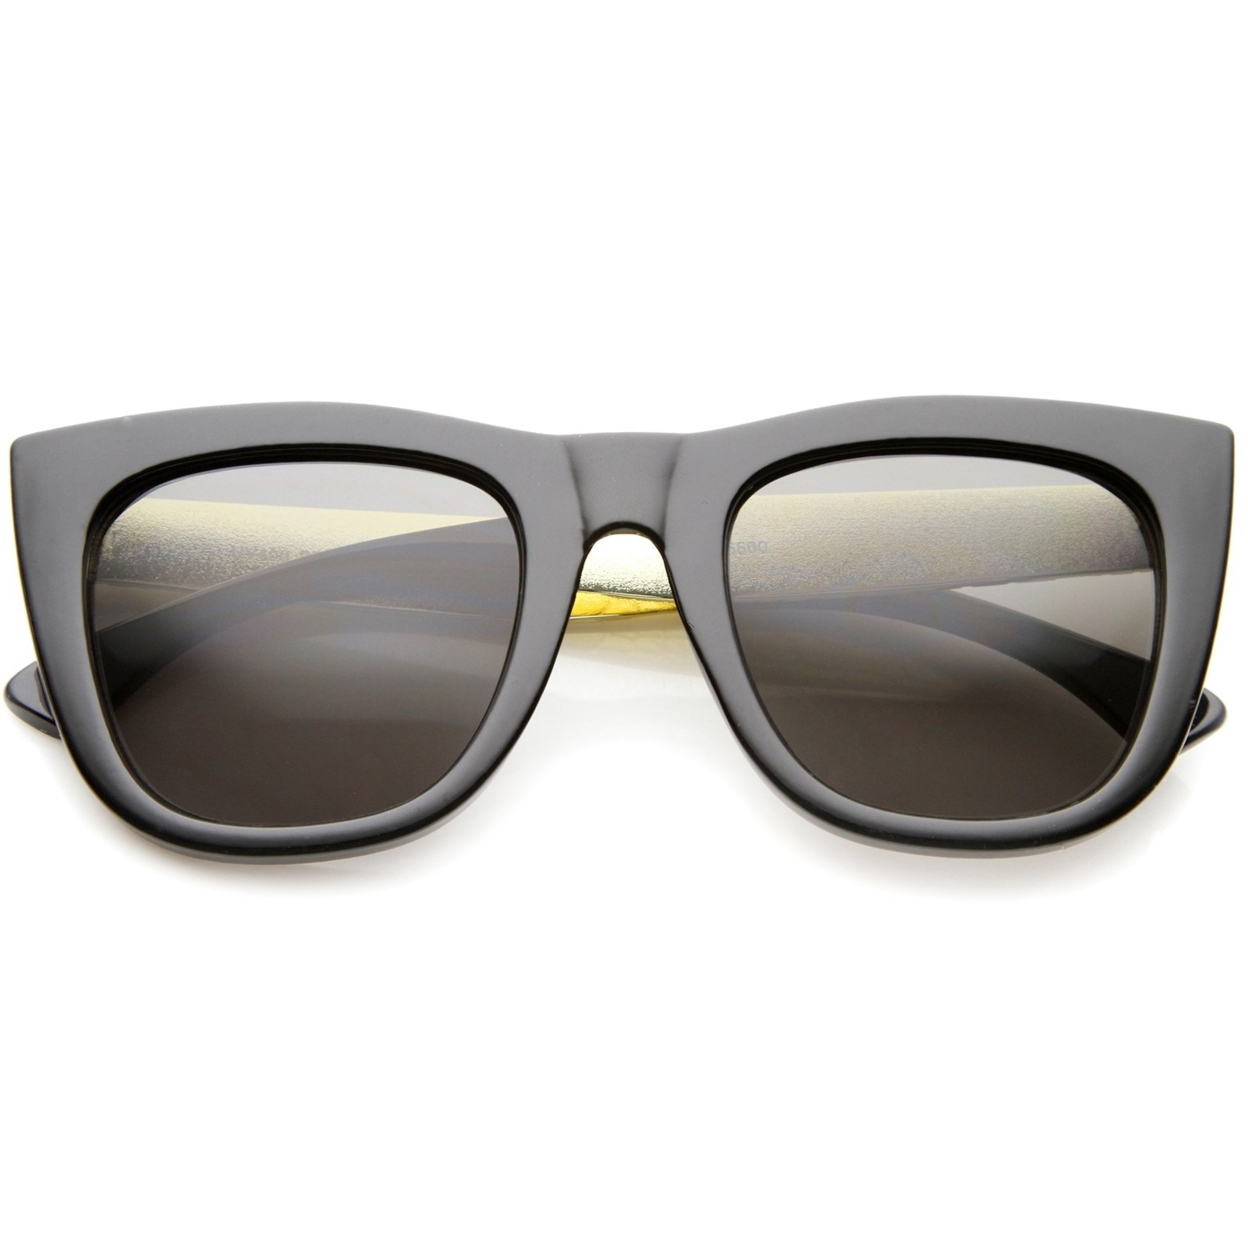 High Fashion Alligator Metal Temple Bold Rimmed Flat Top Sunglasses - Tortoise-Gold / Brown